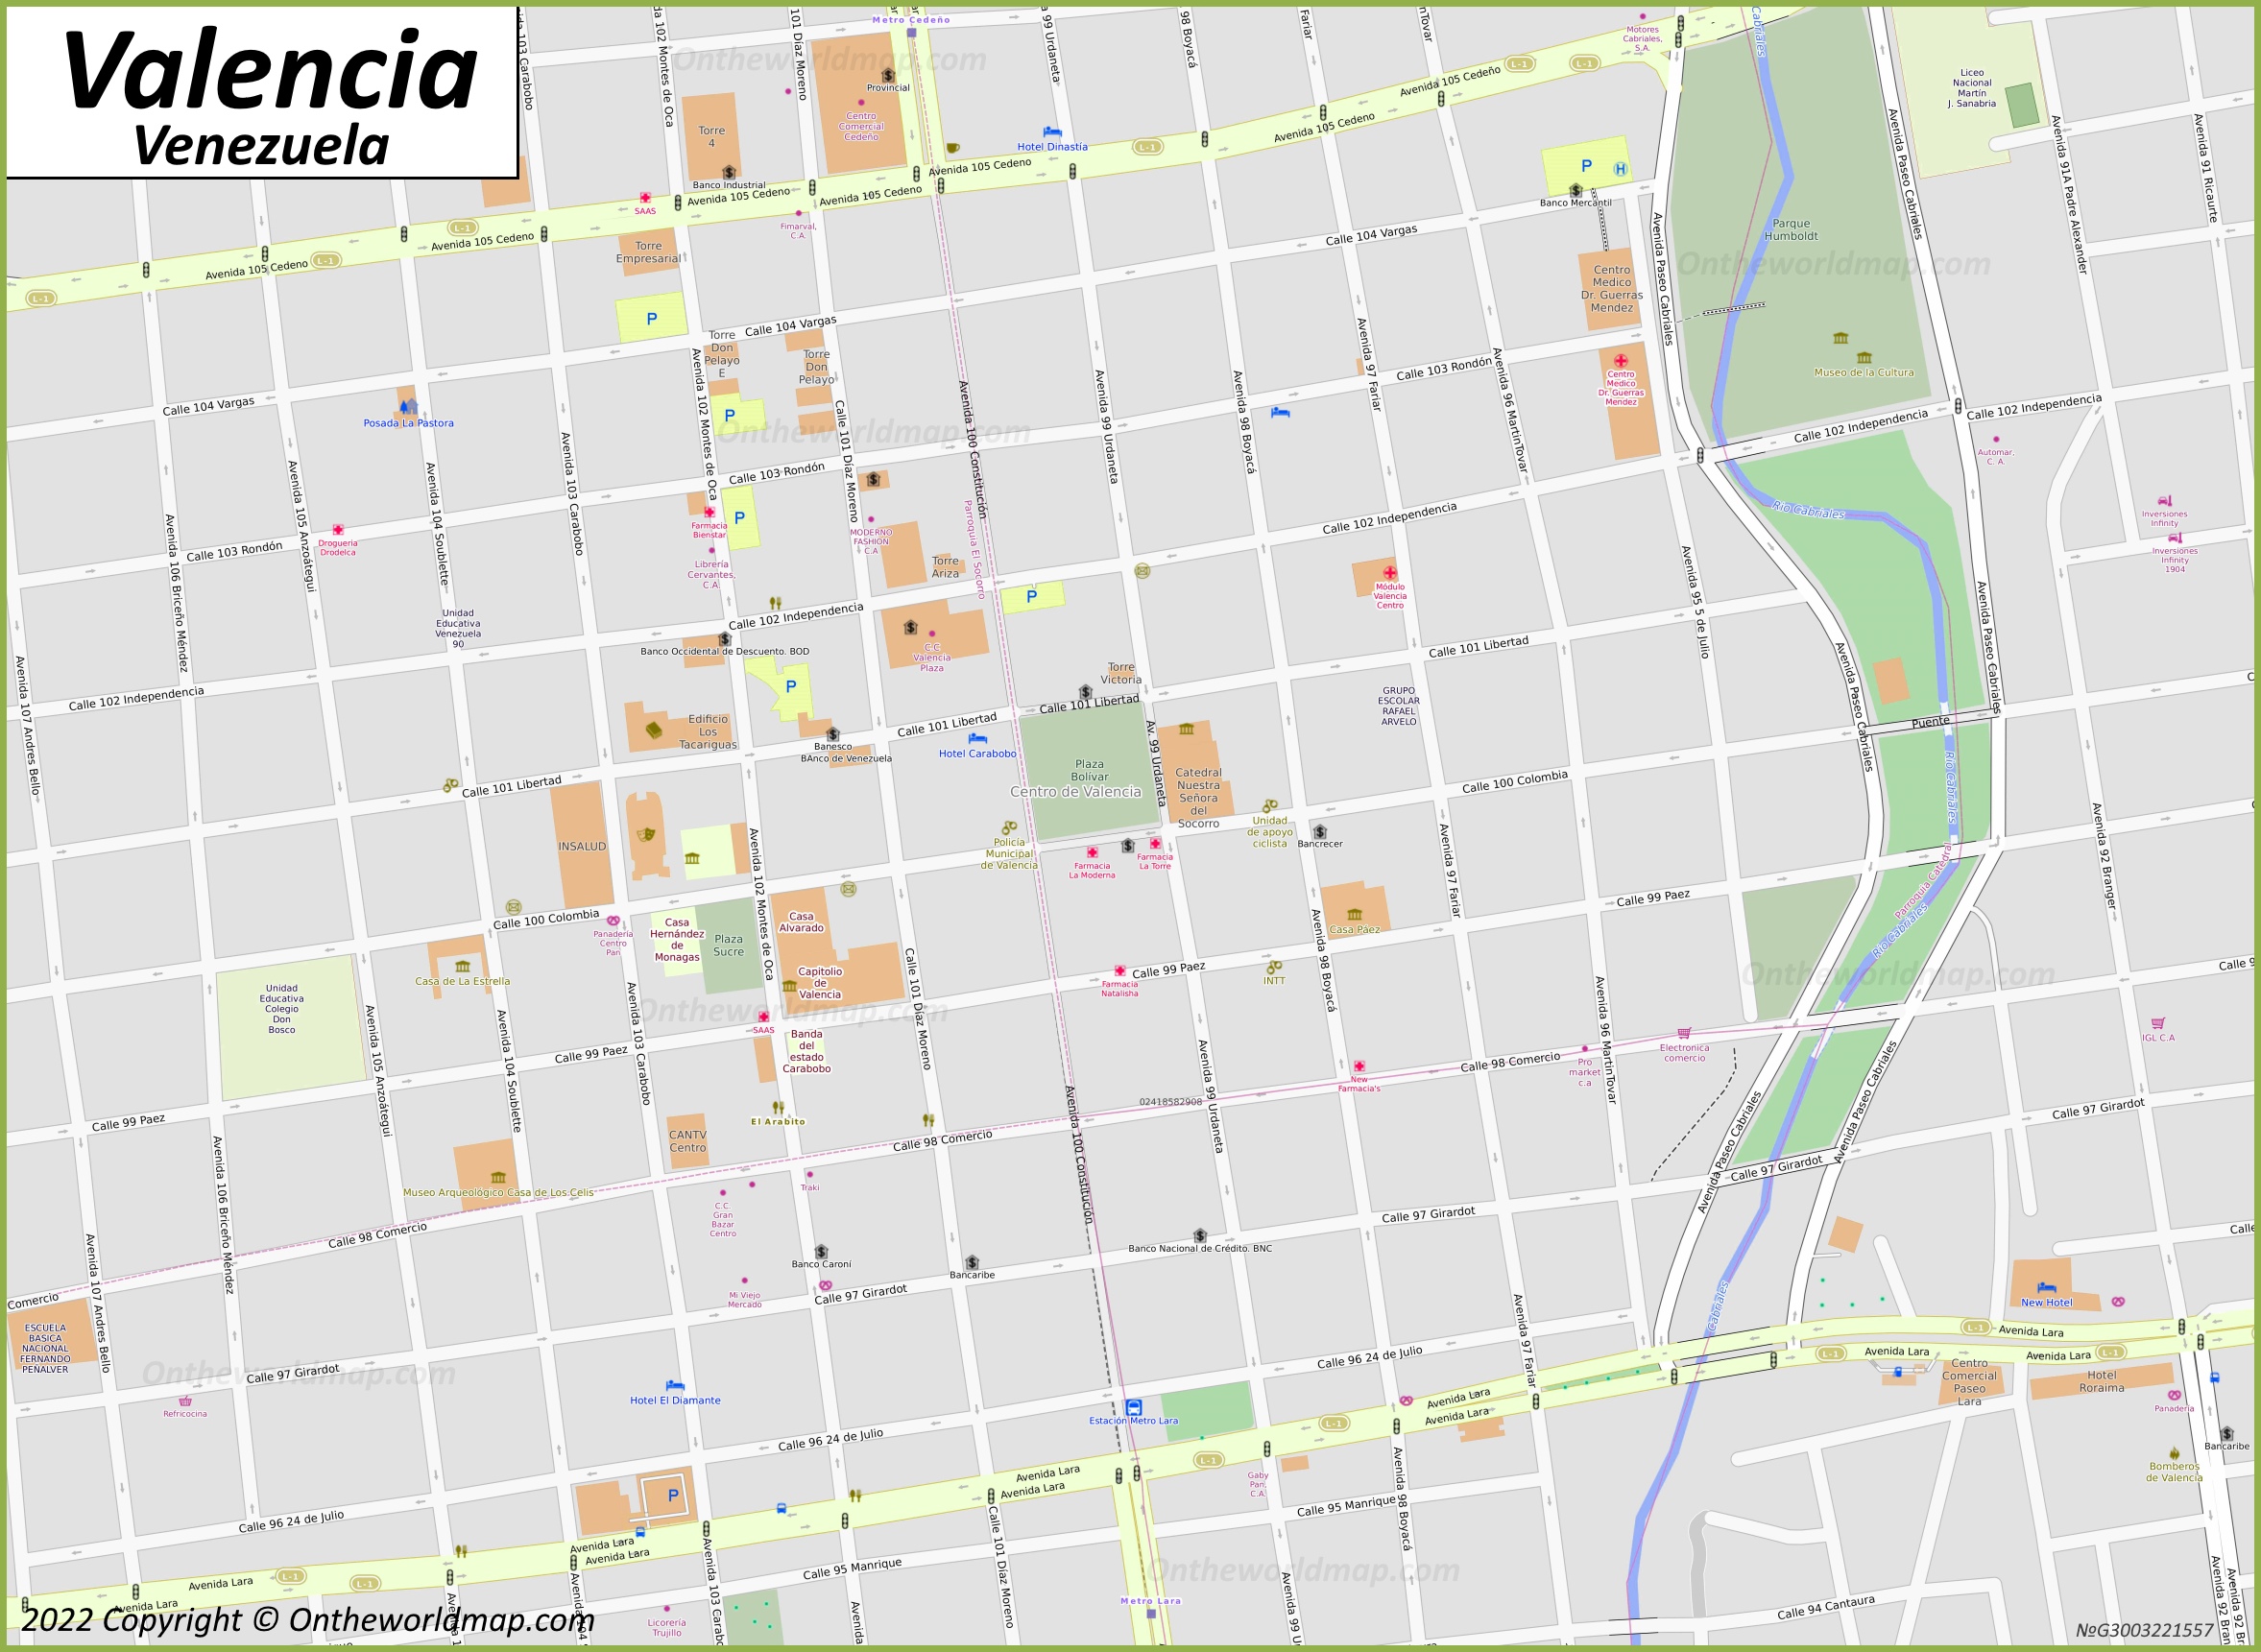 Valencia City Centre Map